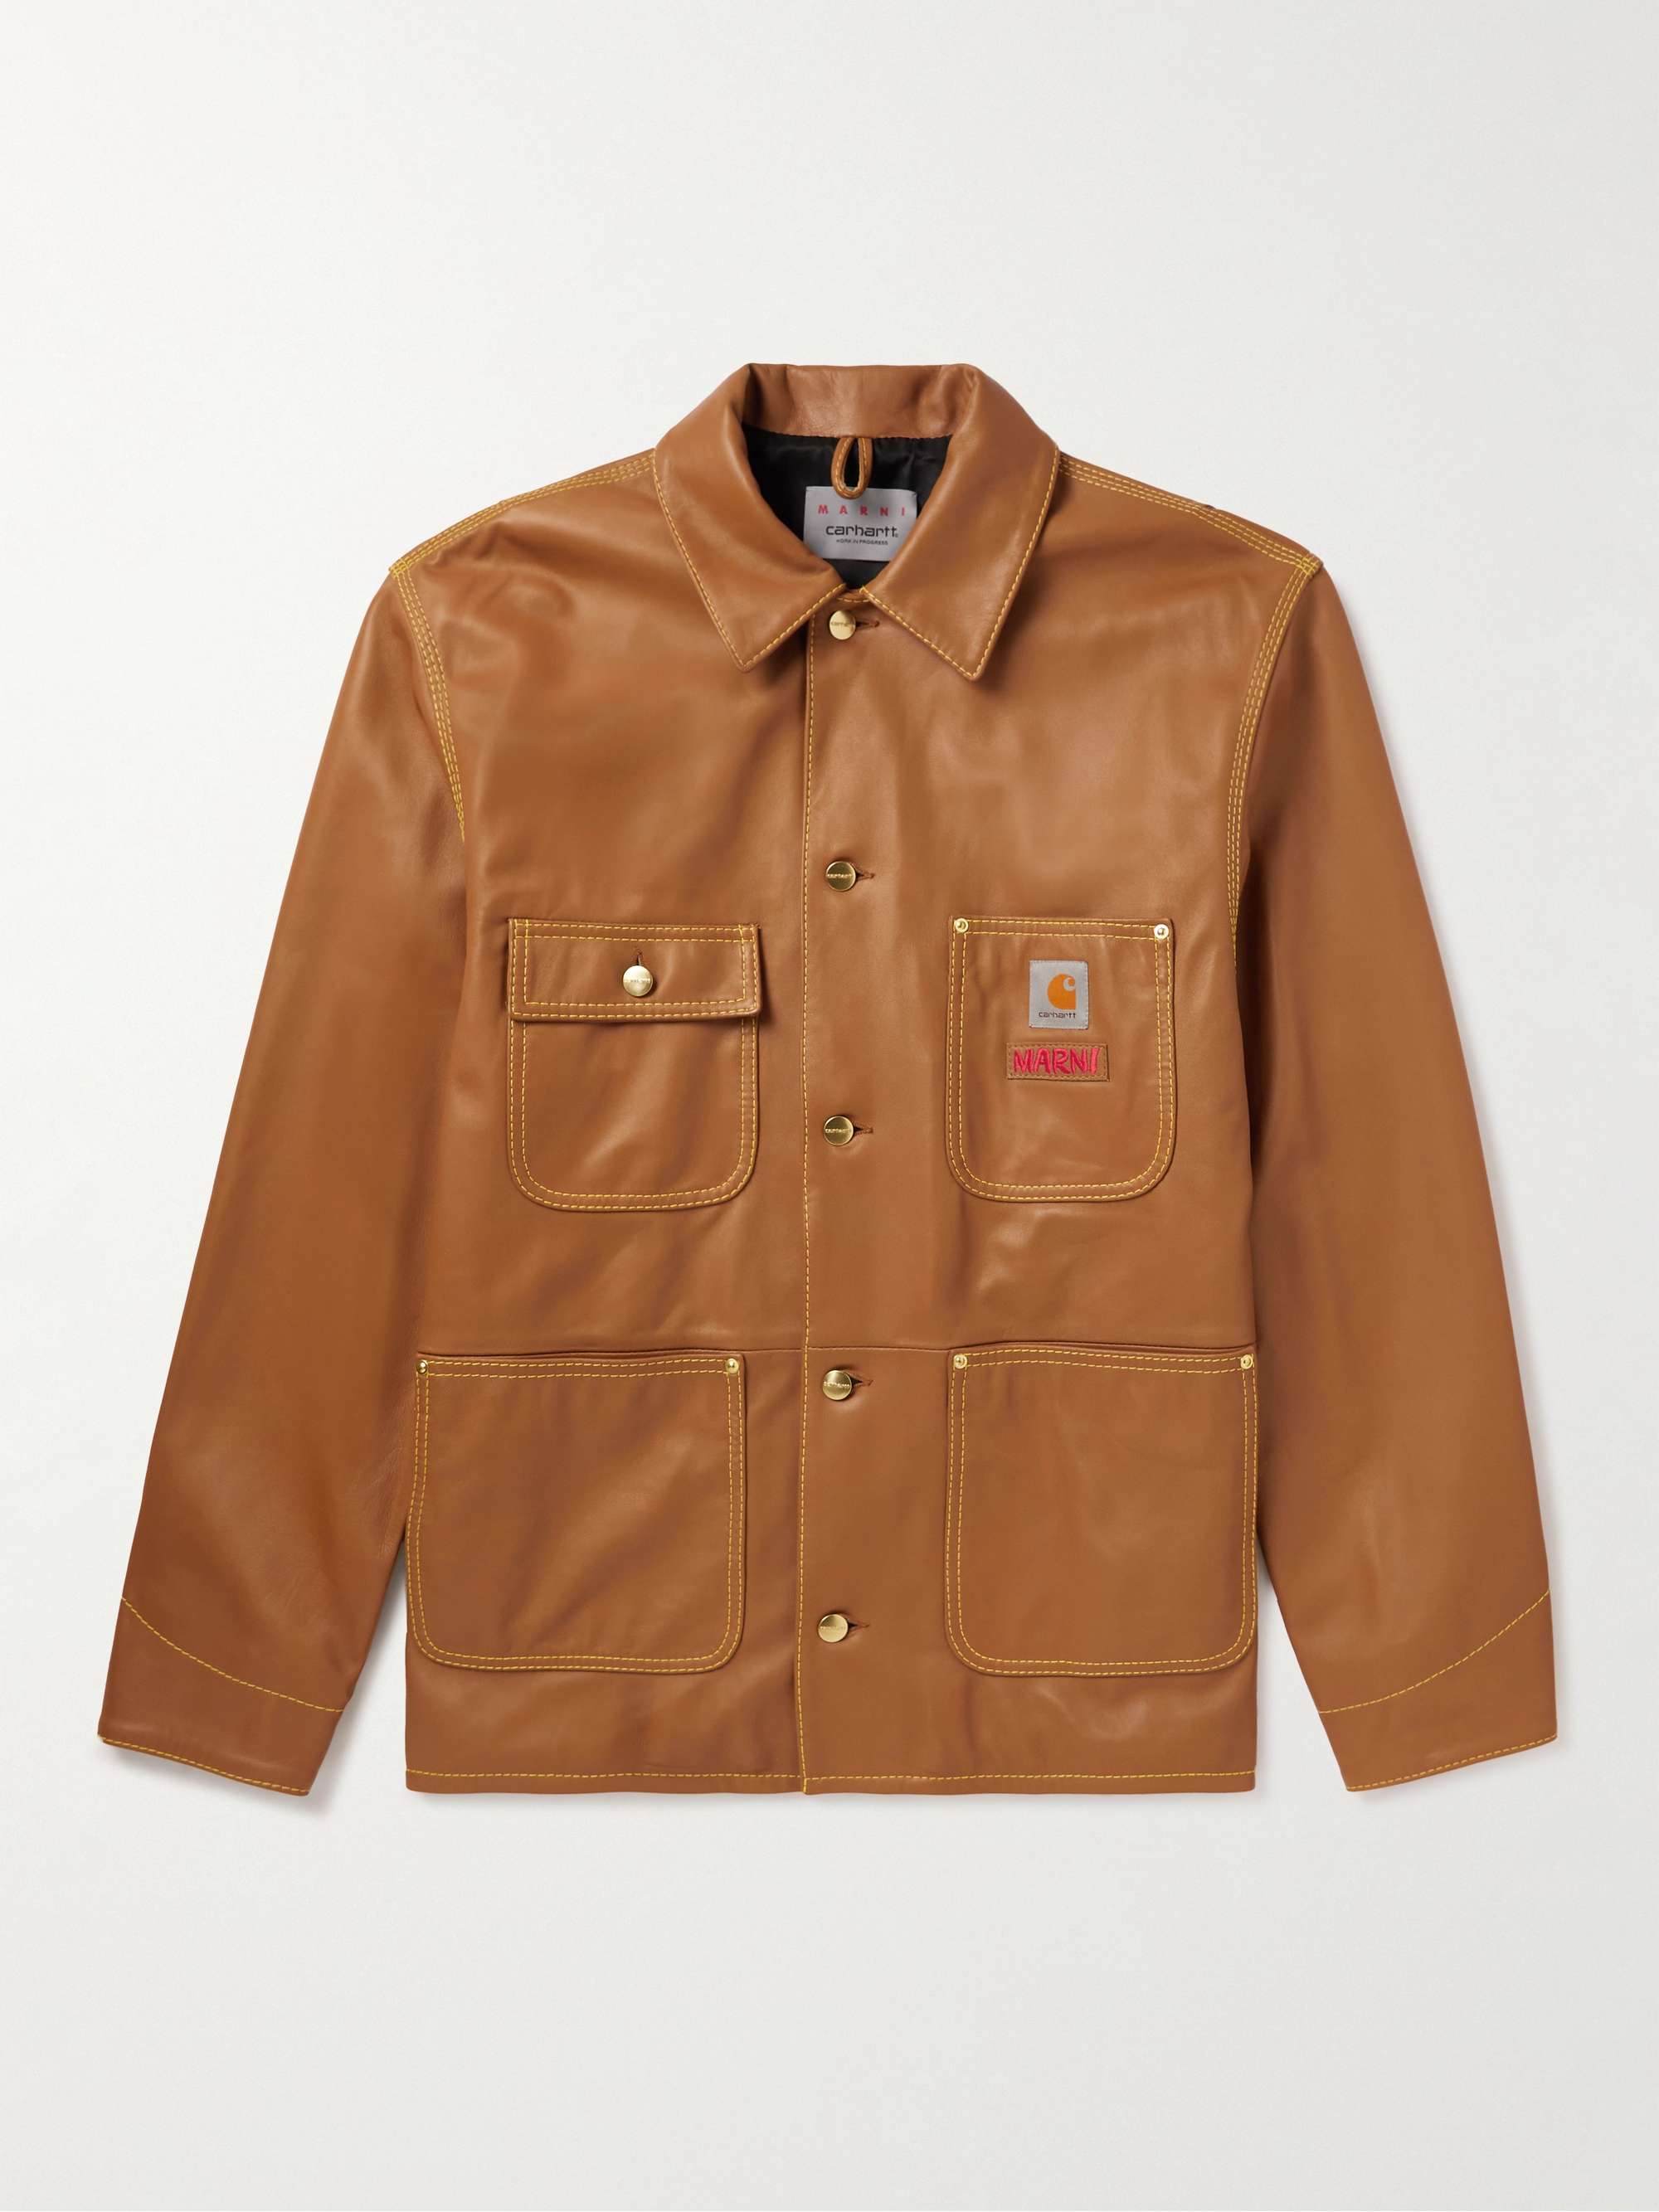 MARNI + Carhartt WIP Leather Jacket for Men | MR PORTER